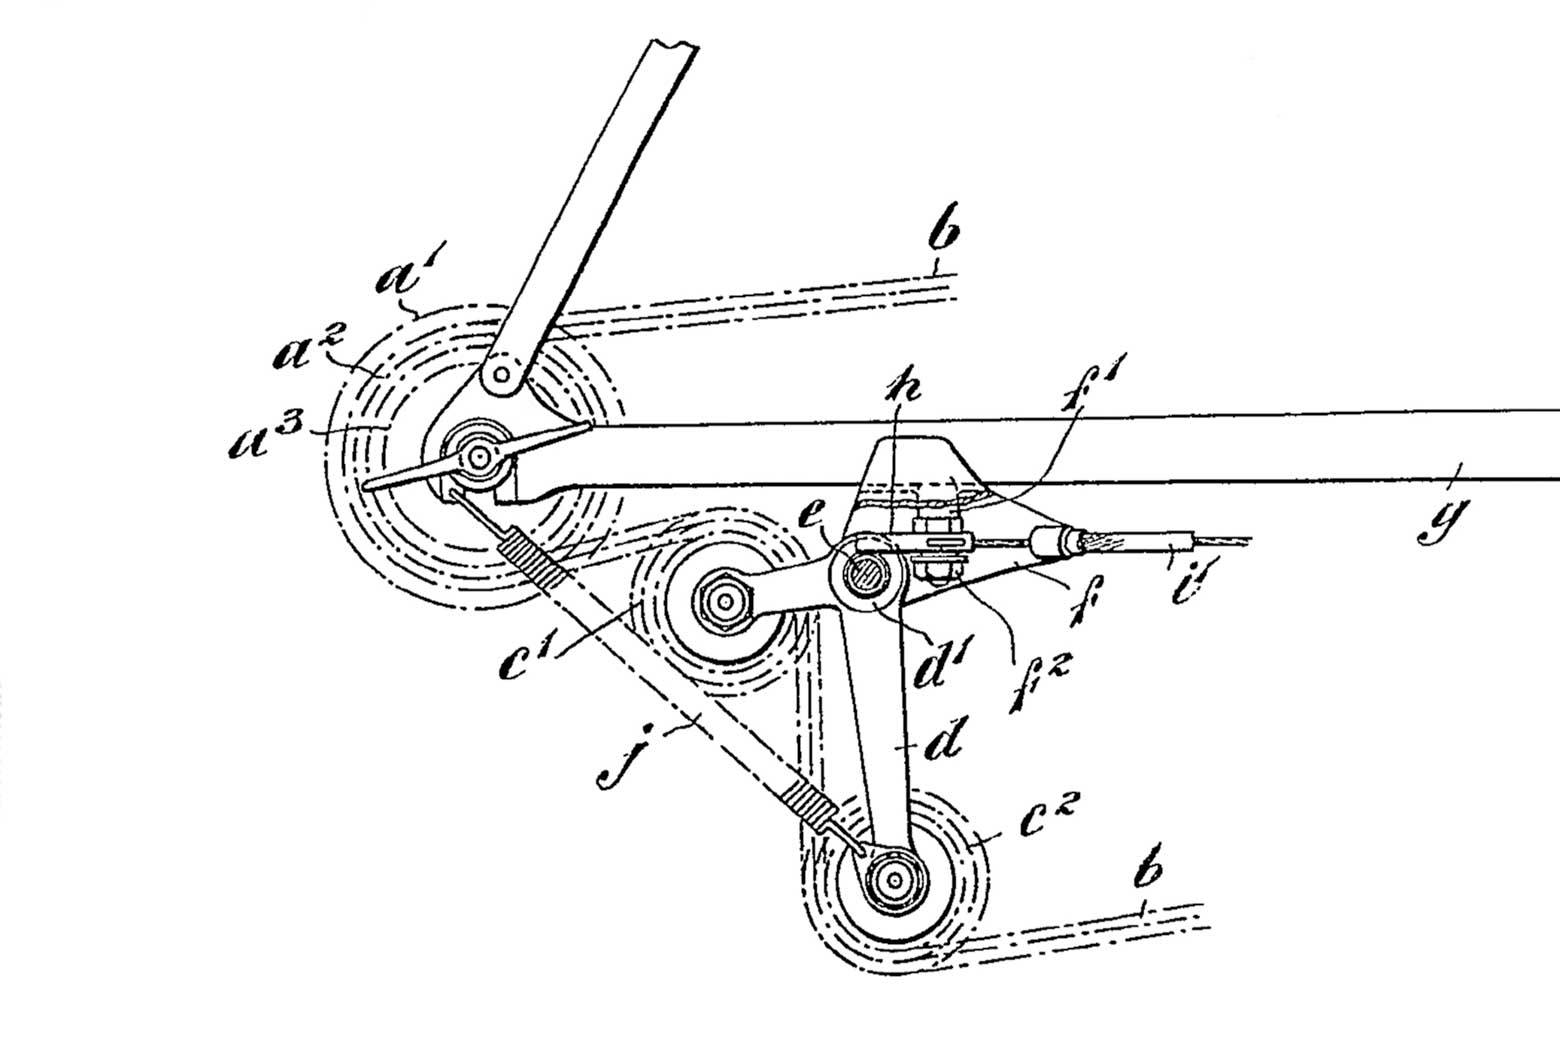 UK Patent 440,377 - Enfield main image